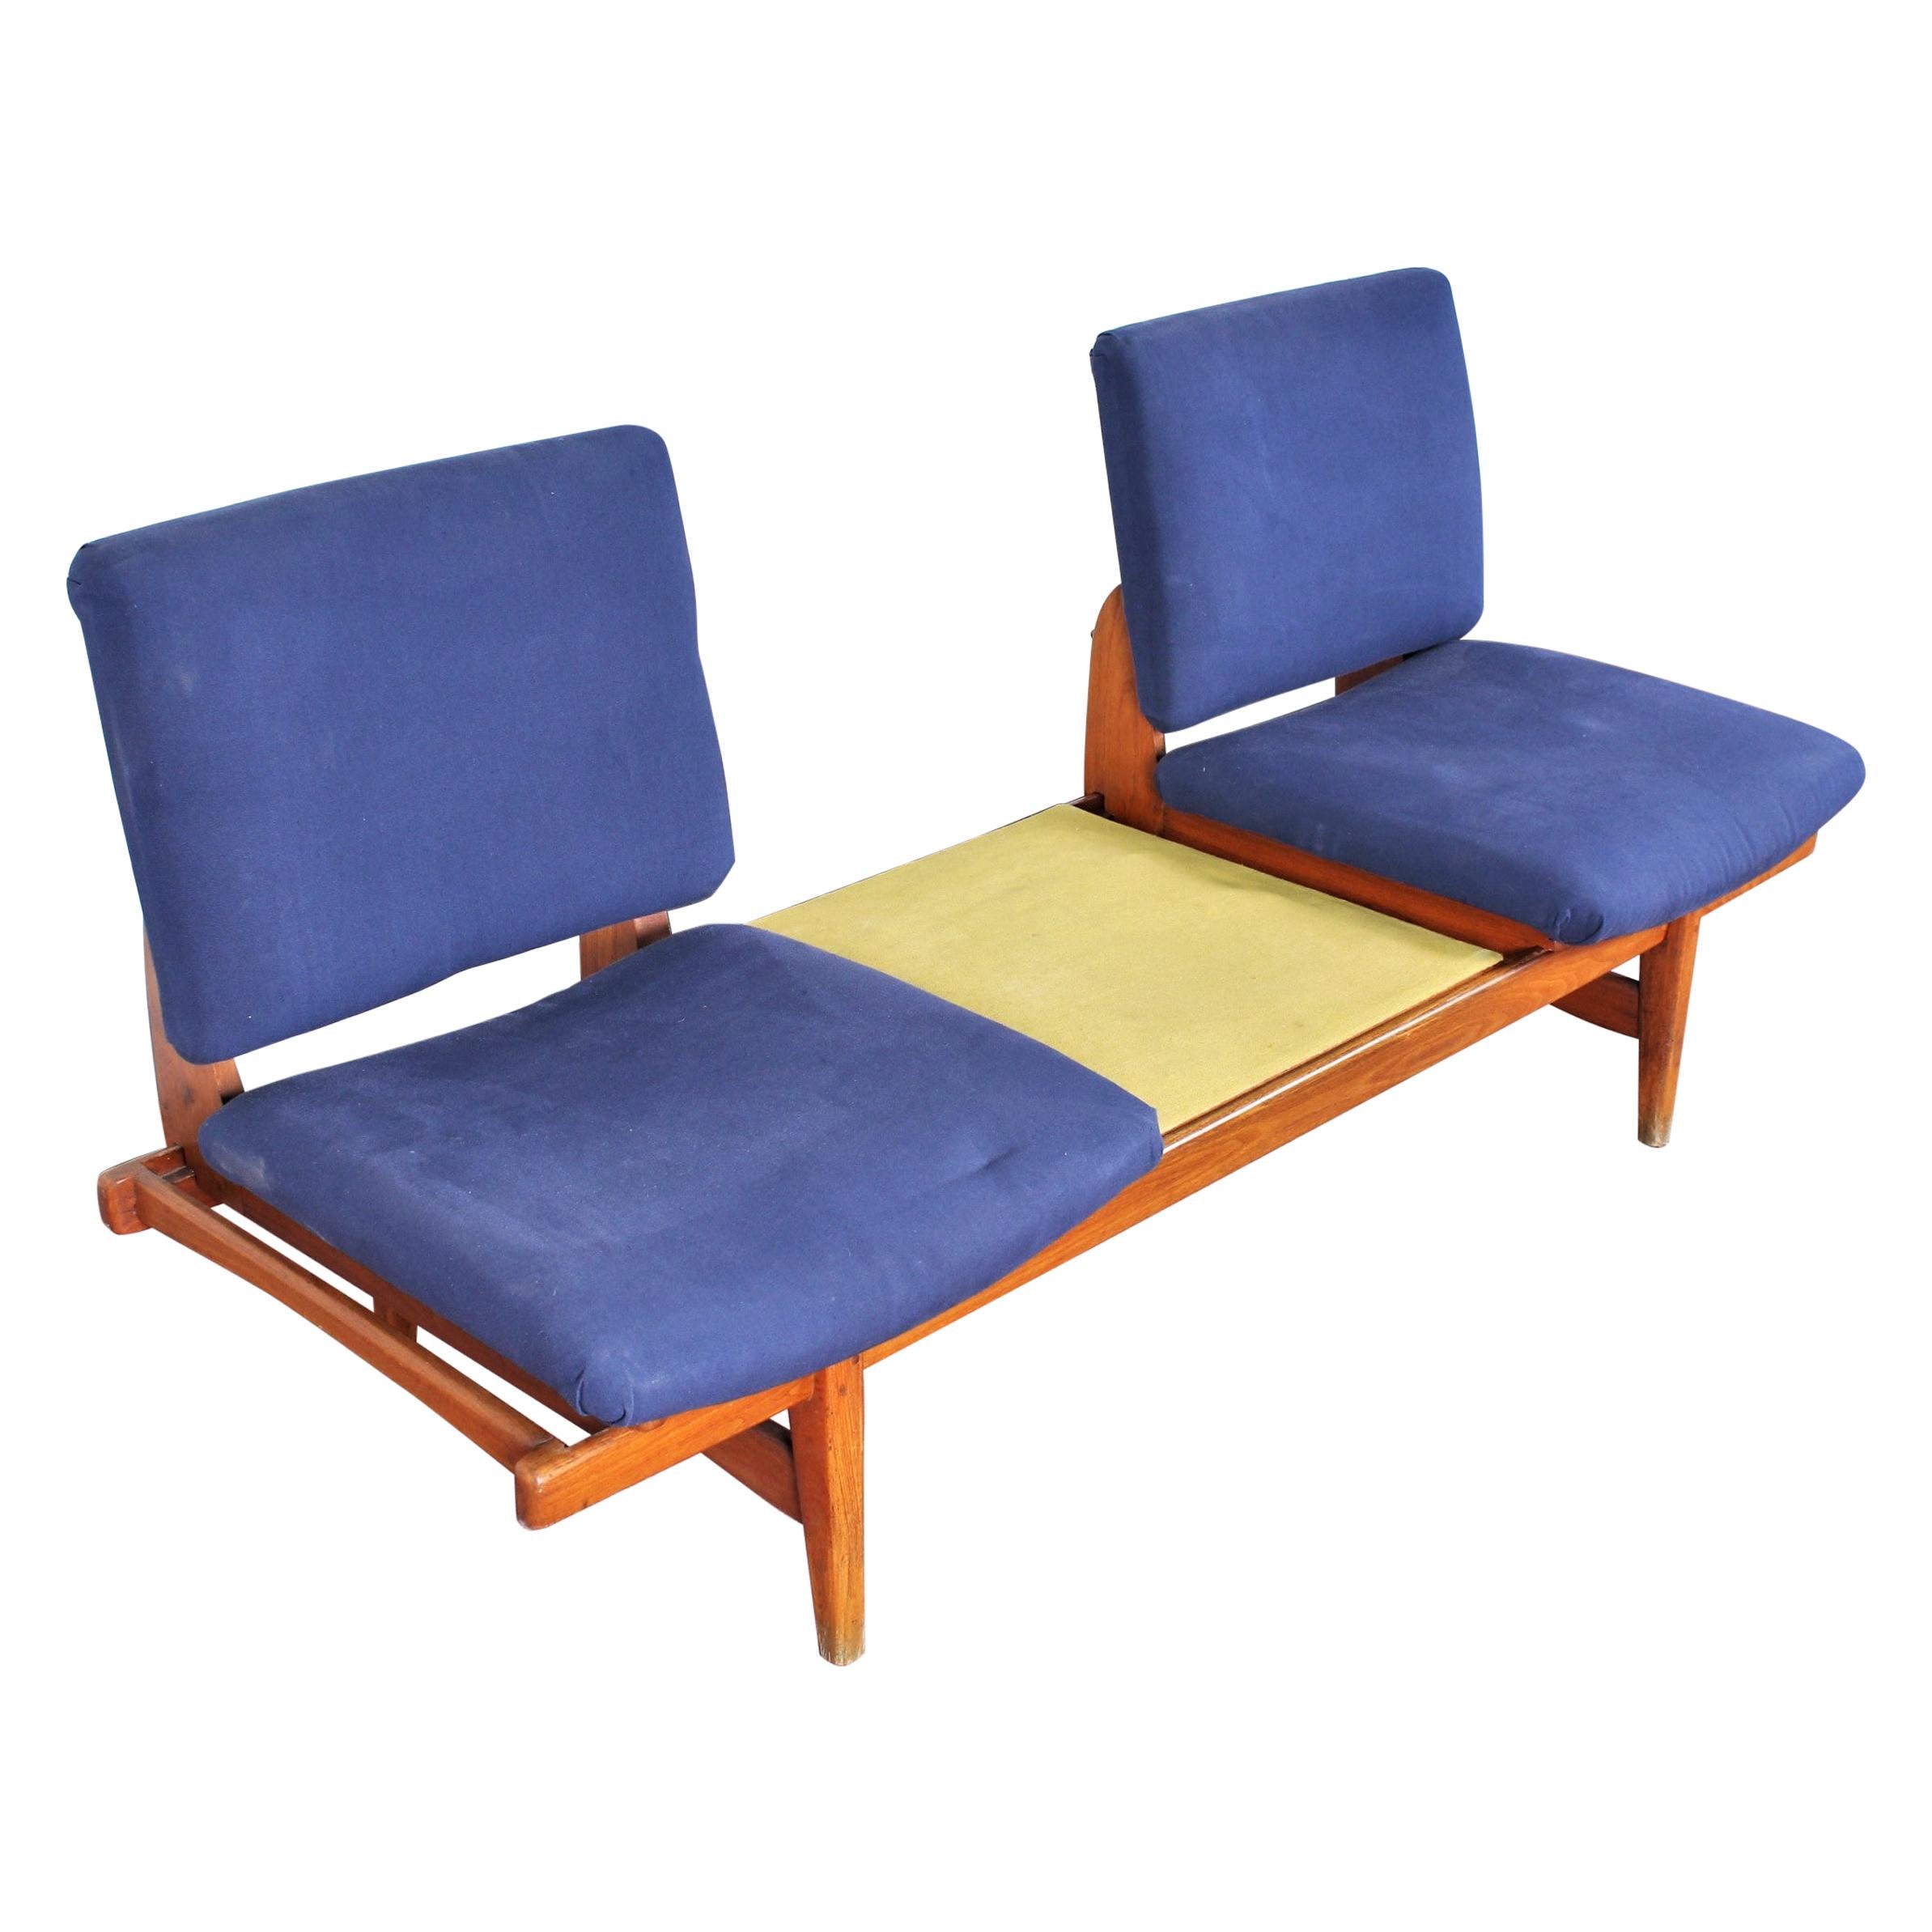 La Permanente Mobili Cantù Yellow and Blue Modular Two-Seat Bench Sofa, 1960s